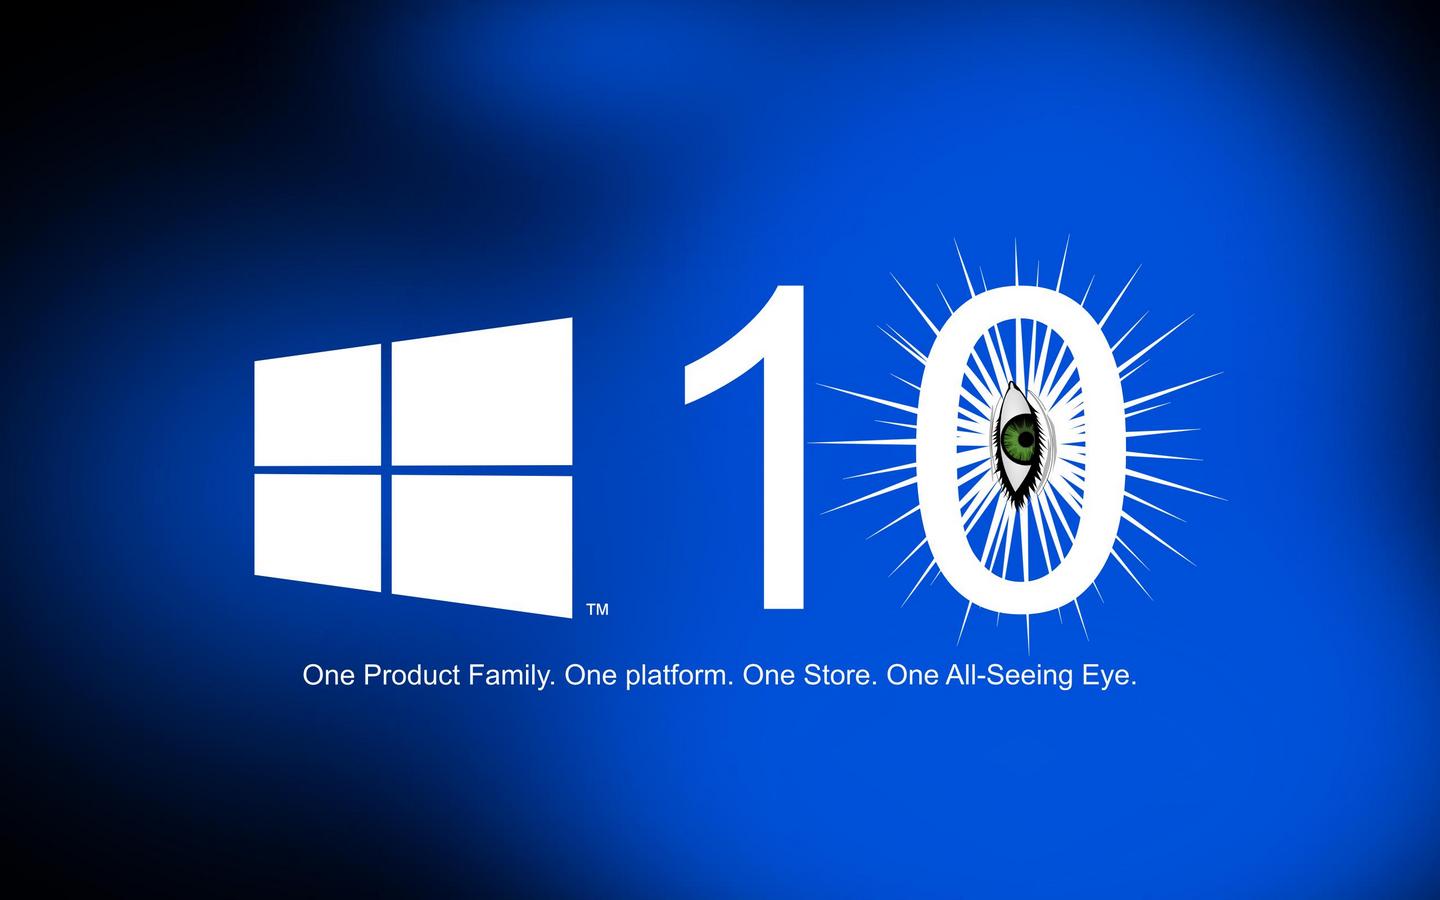 Windows 10 1440x900. Pozad, Tapeta na plochu PC ke staen